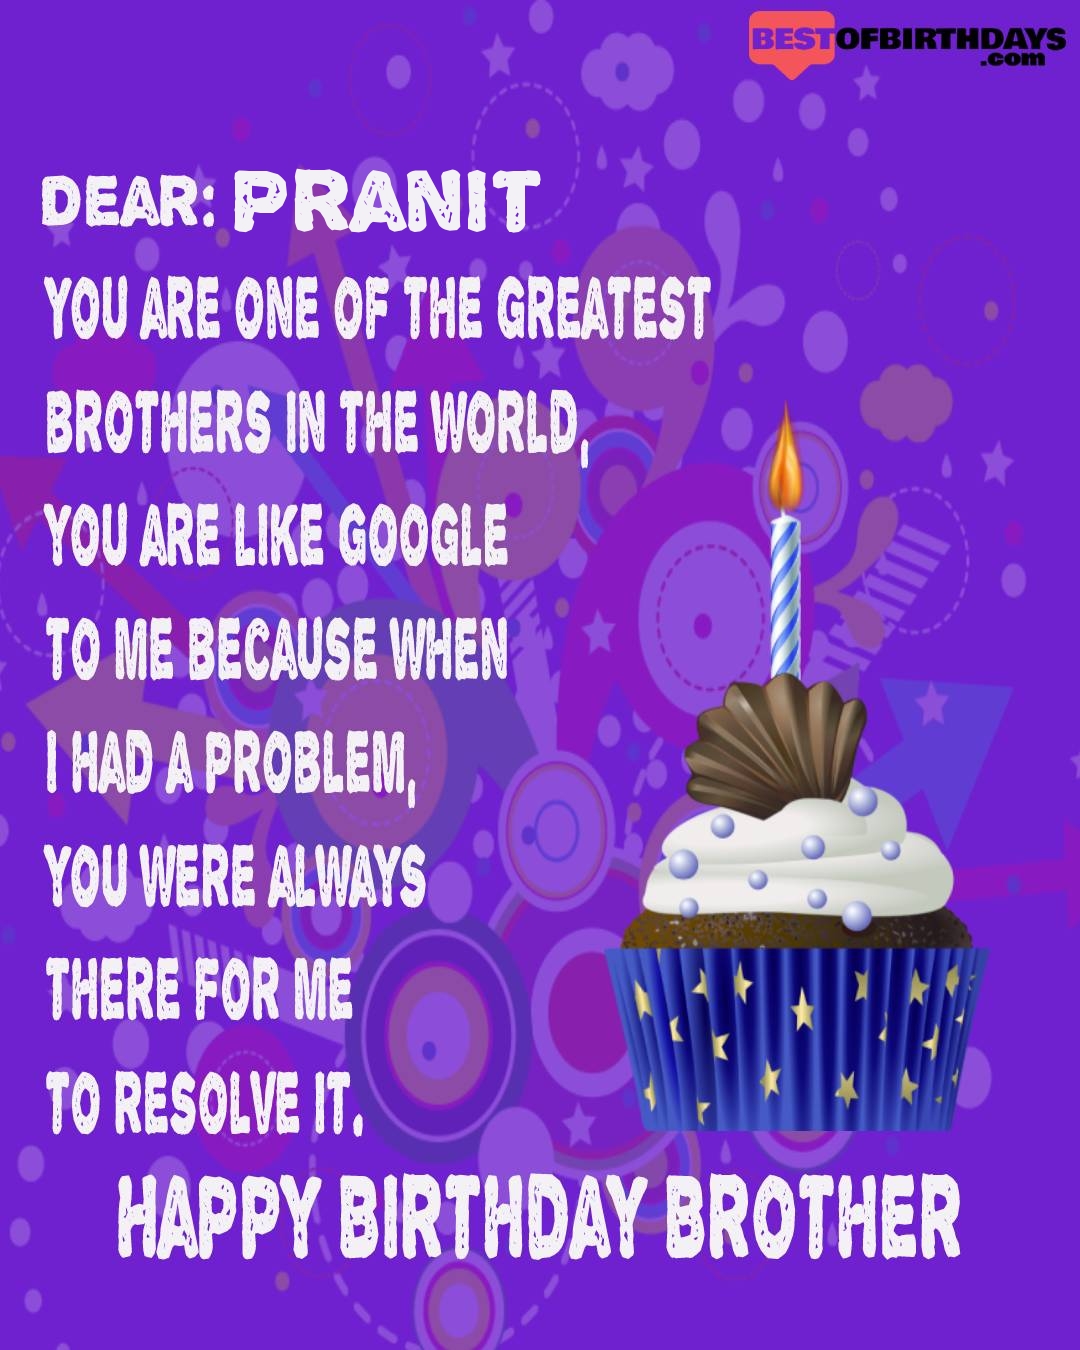 Happy birthday pranit bhai brother bro